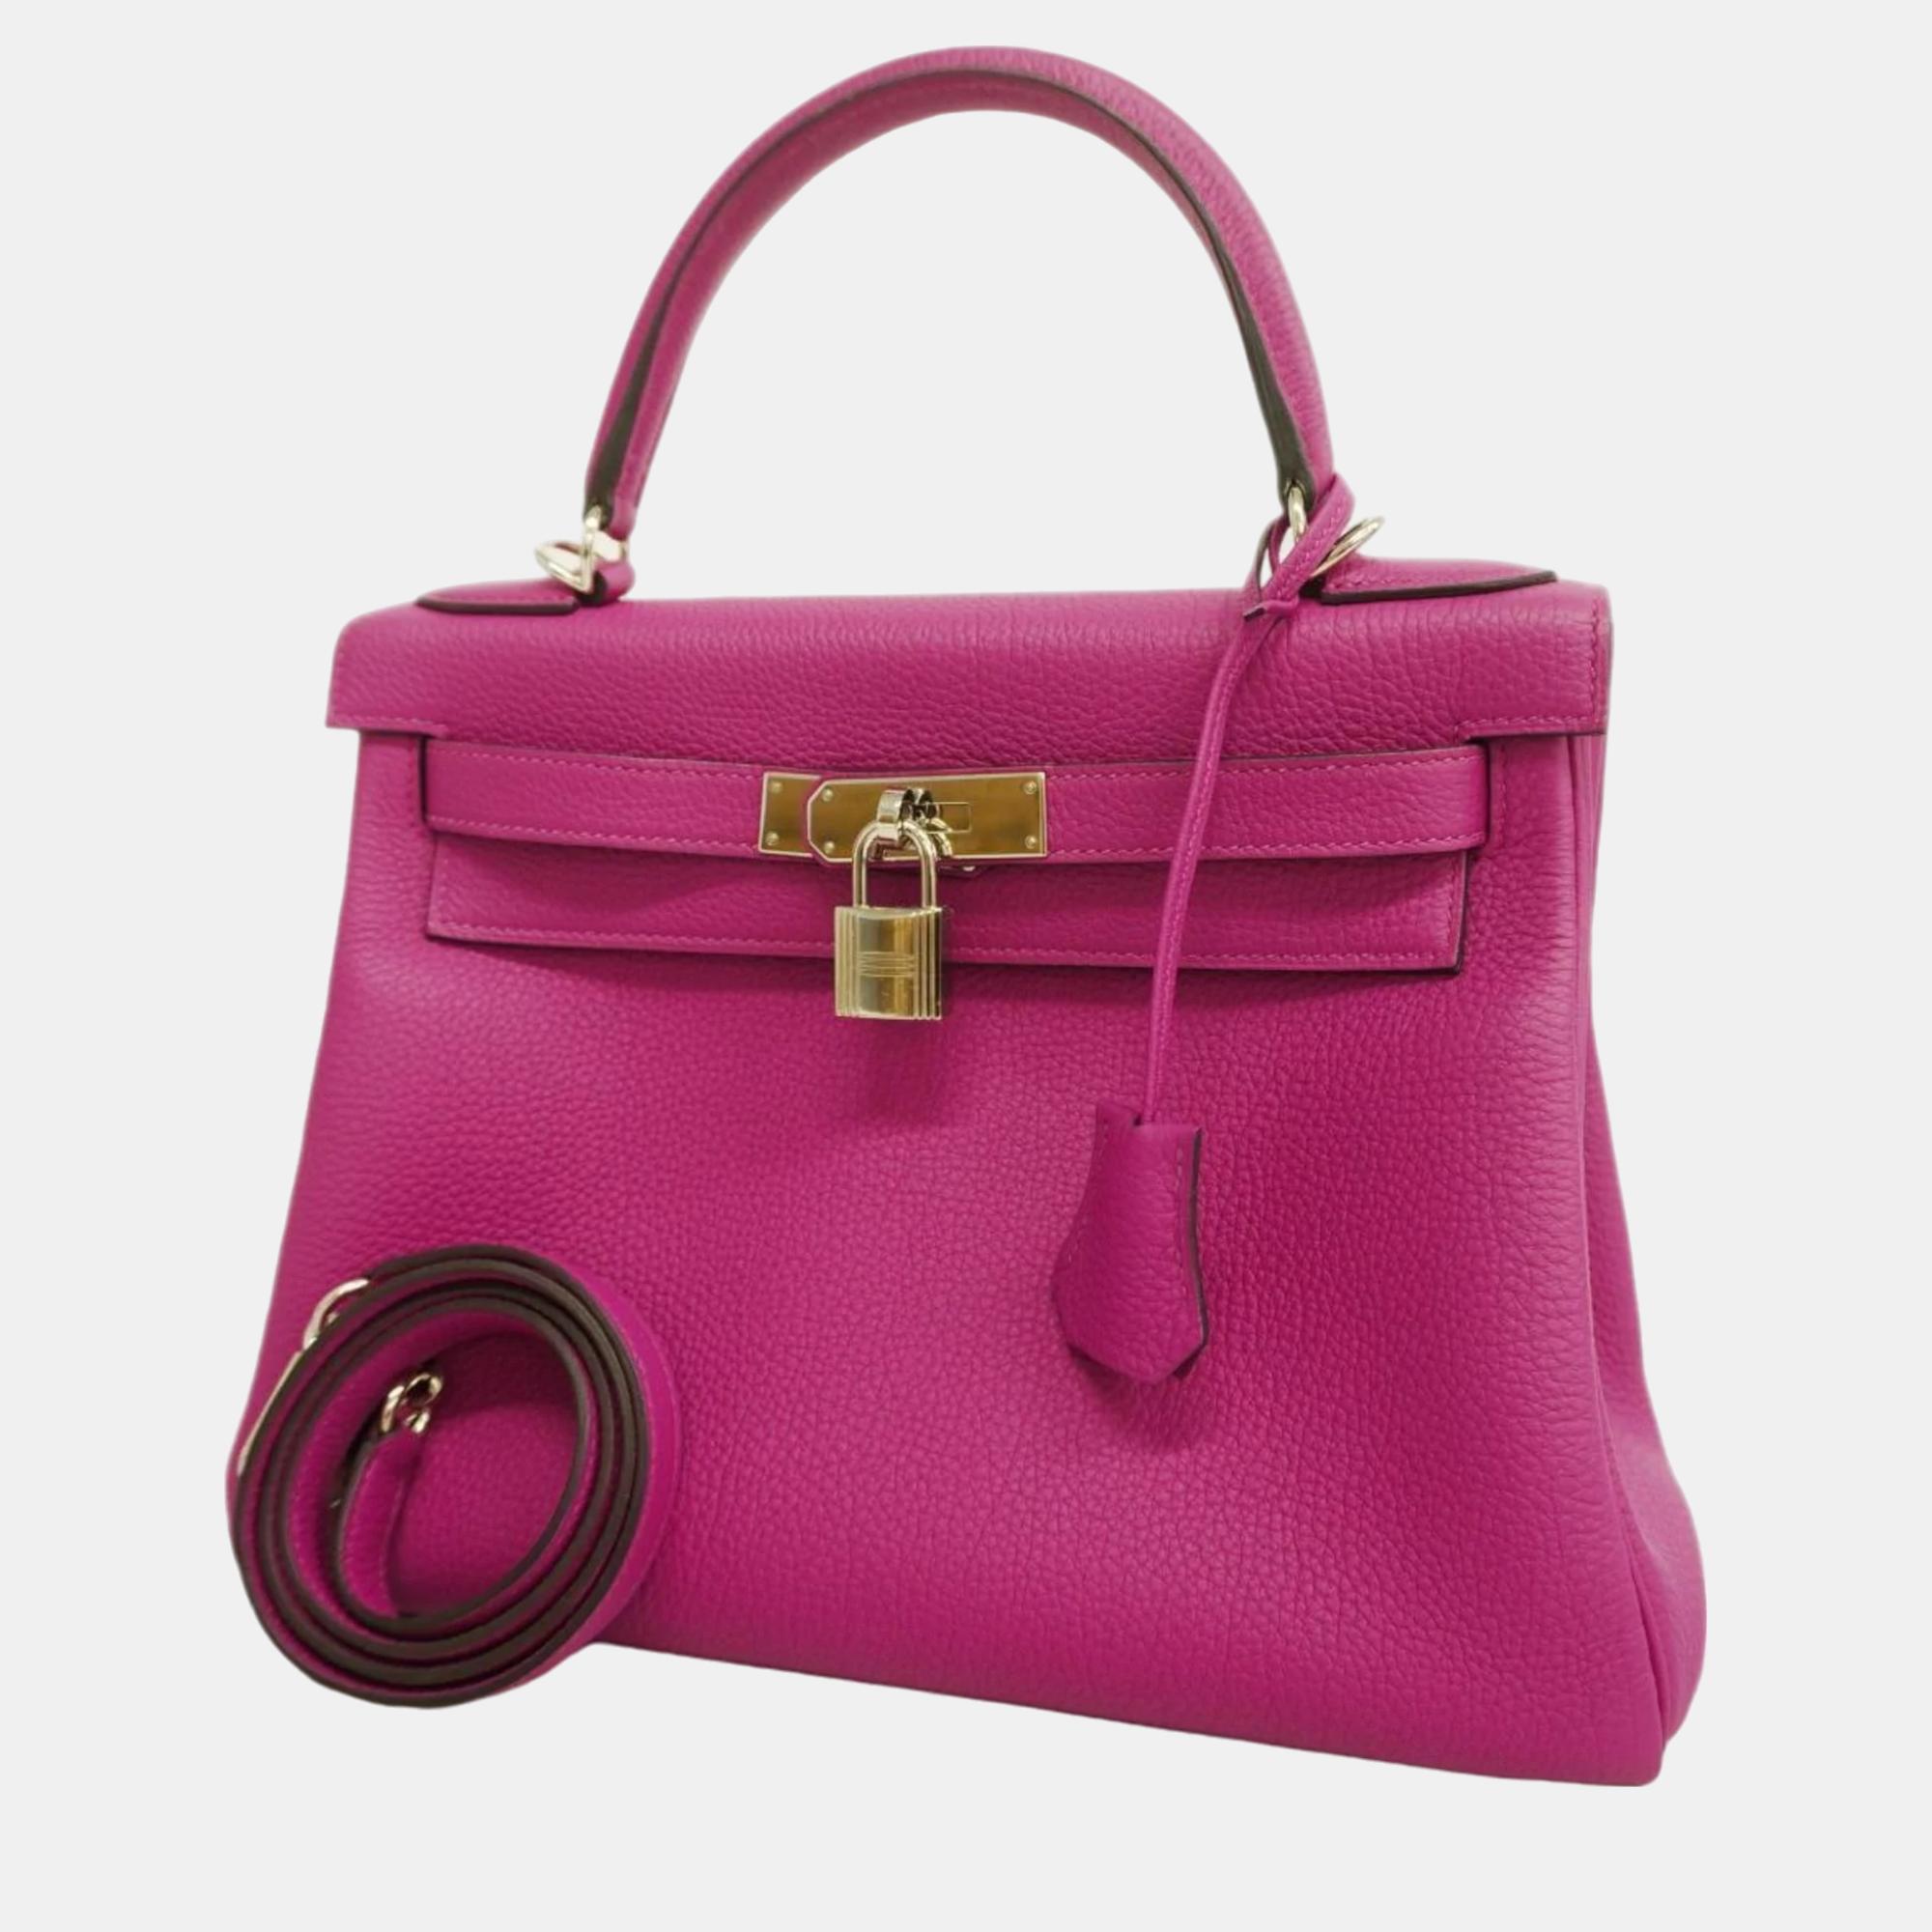 Hermes rose purple togo leather kelly 28 tote bag